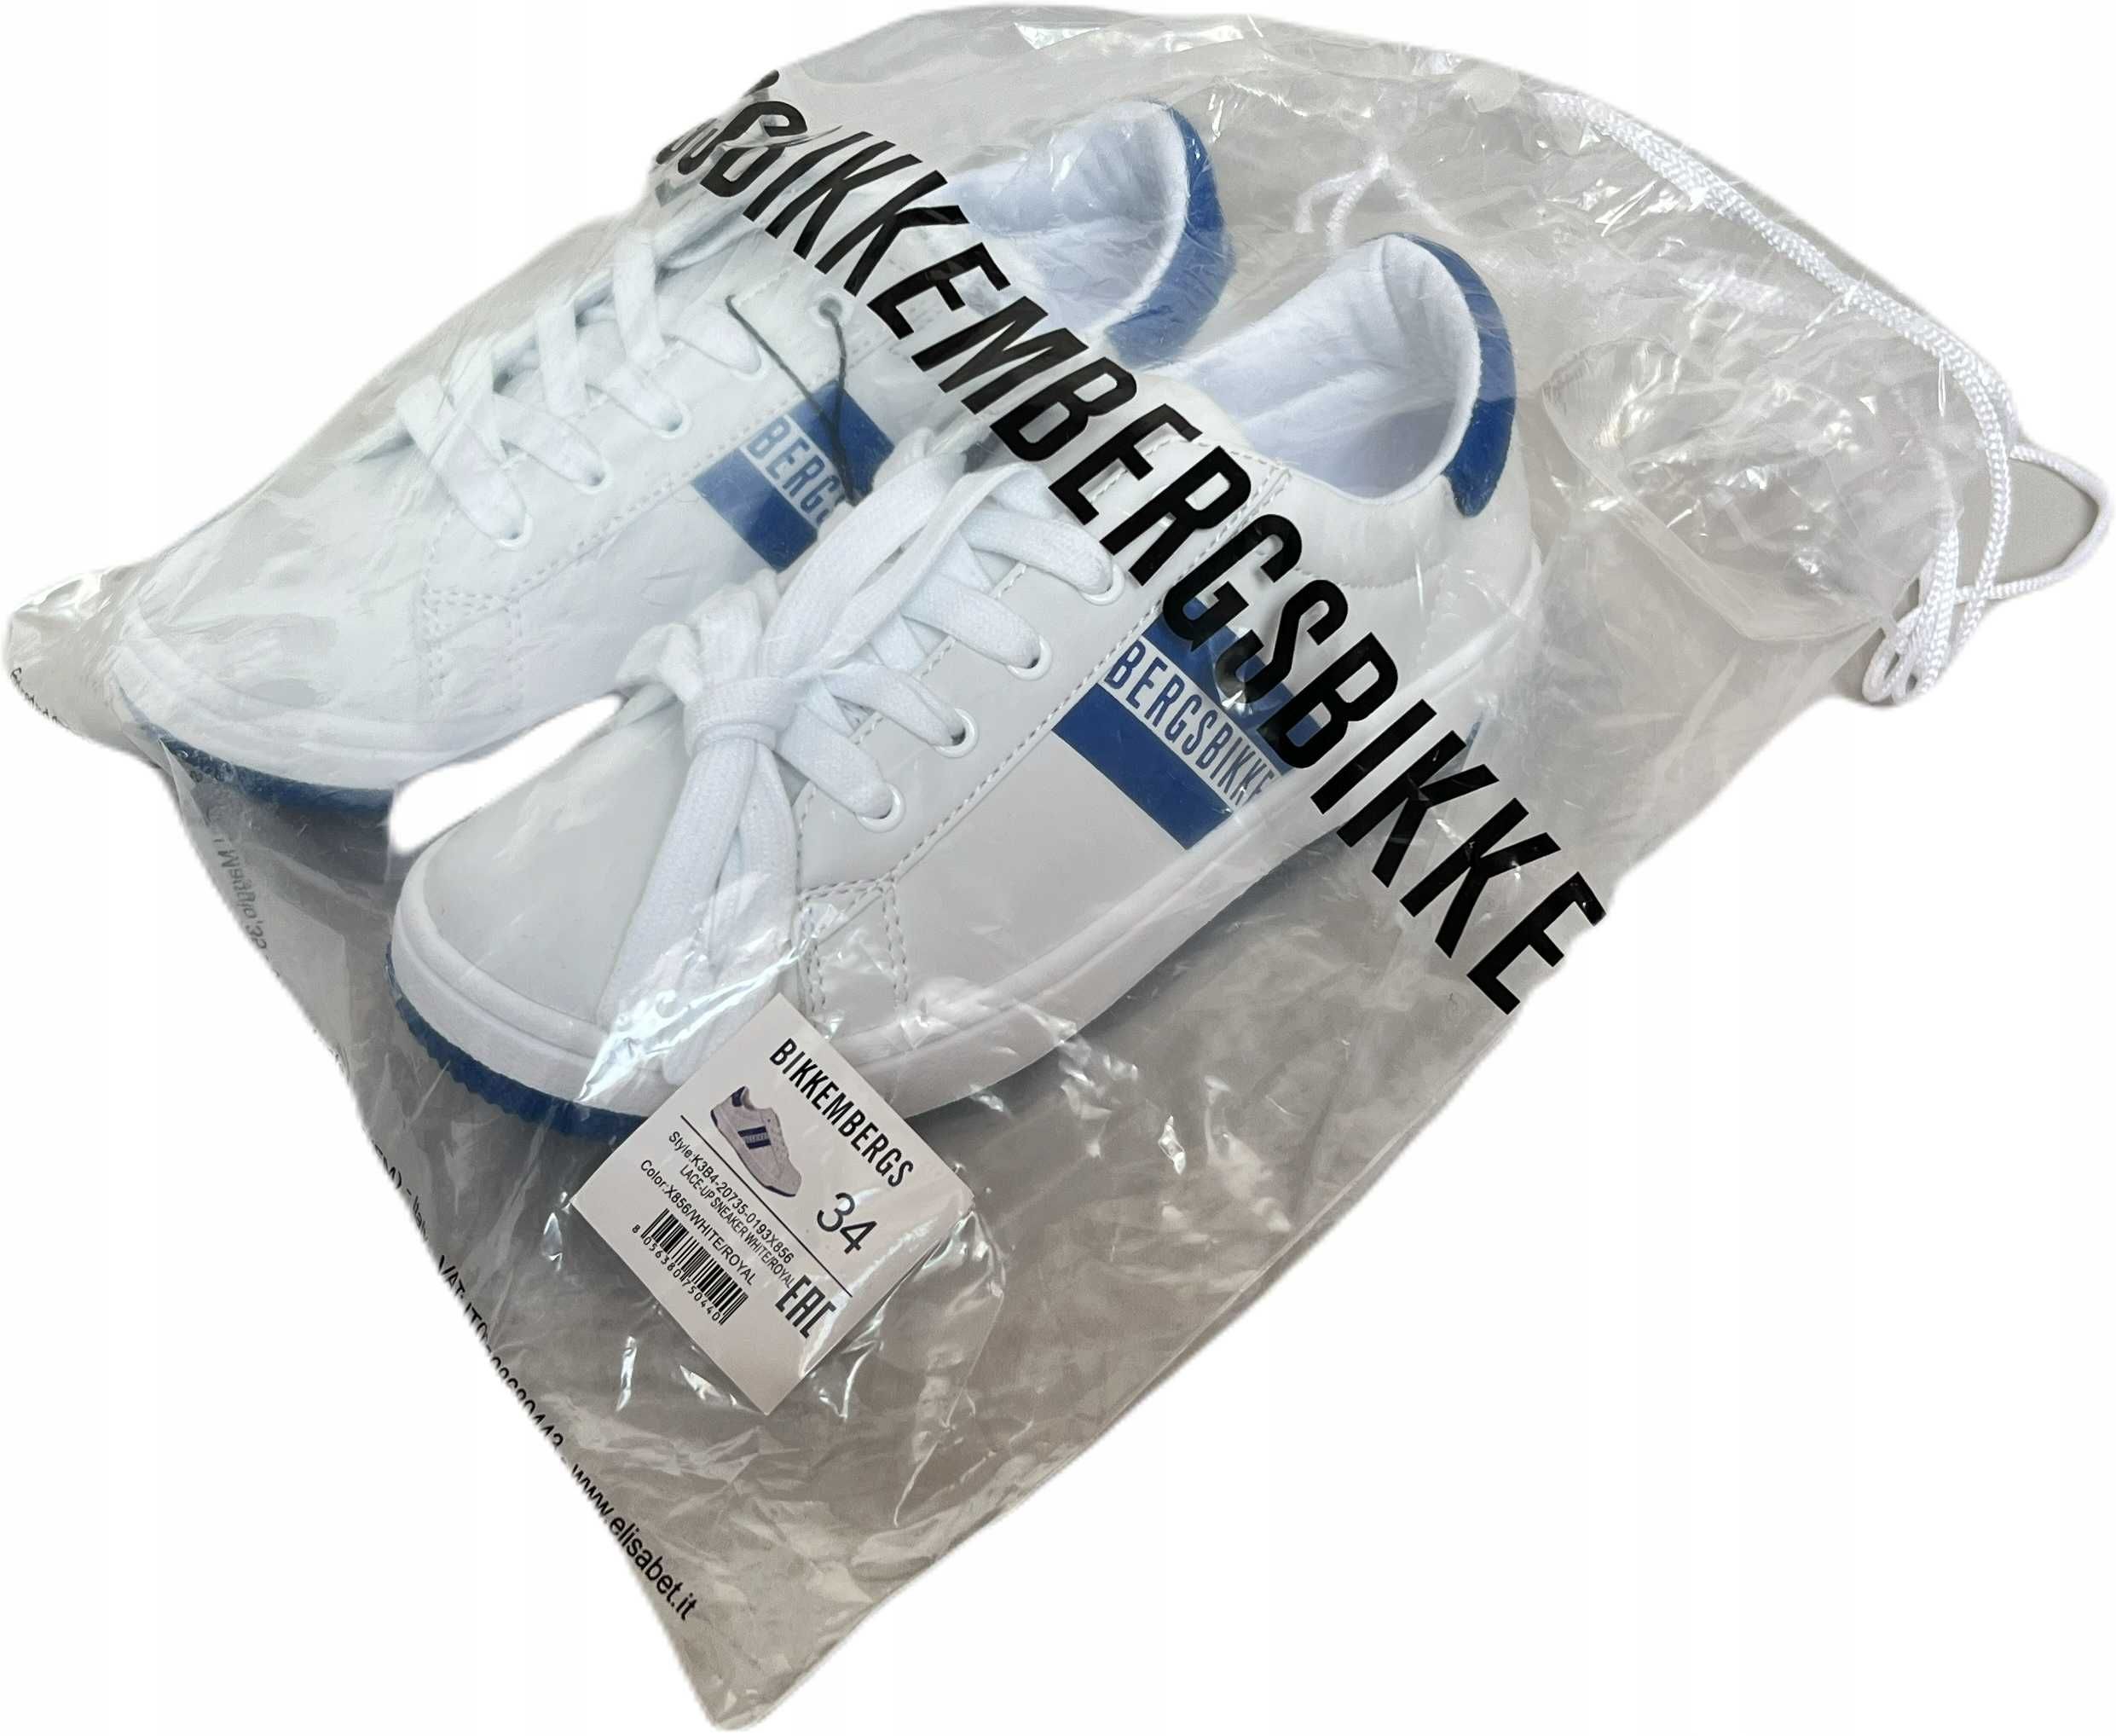 Buty dziecięce Bikkembergs K3B4 White Royal Sneakers R:34